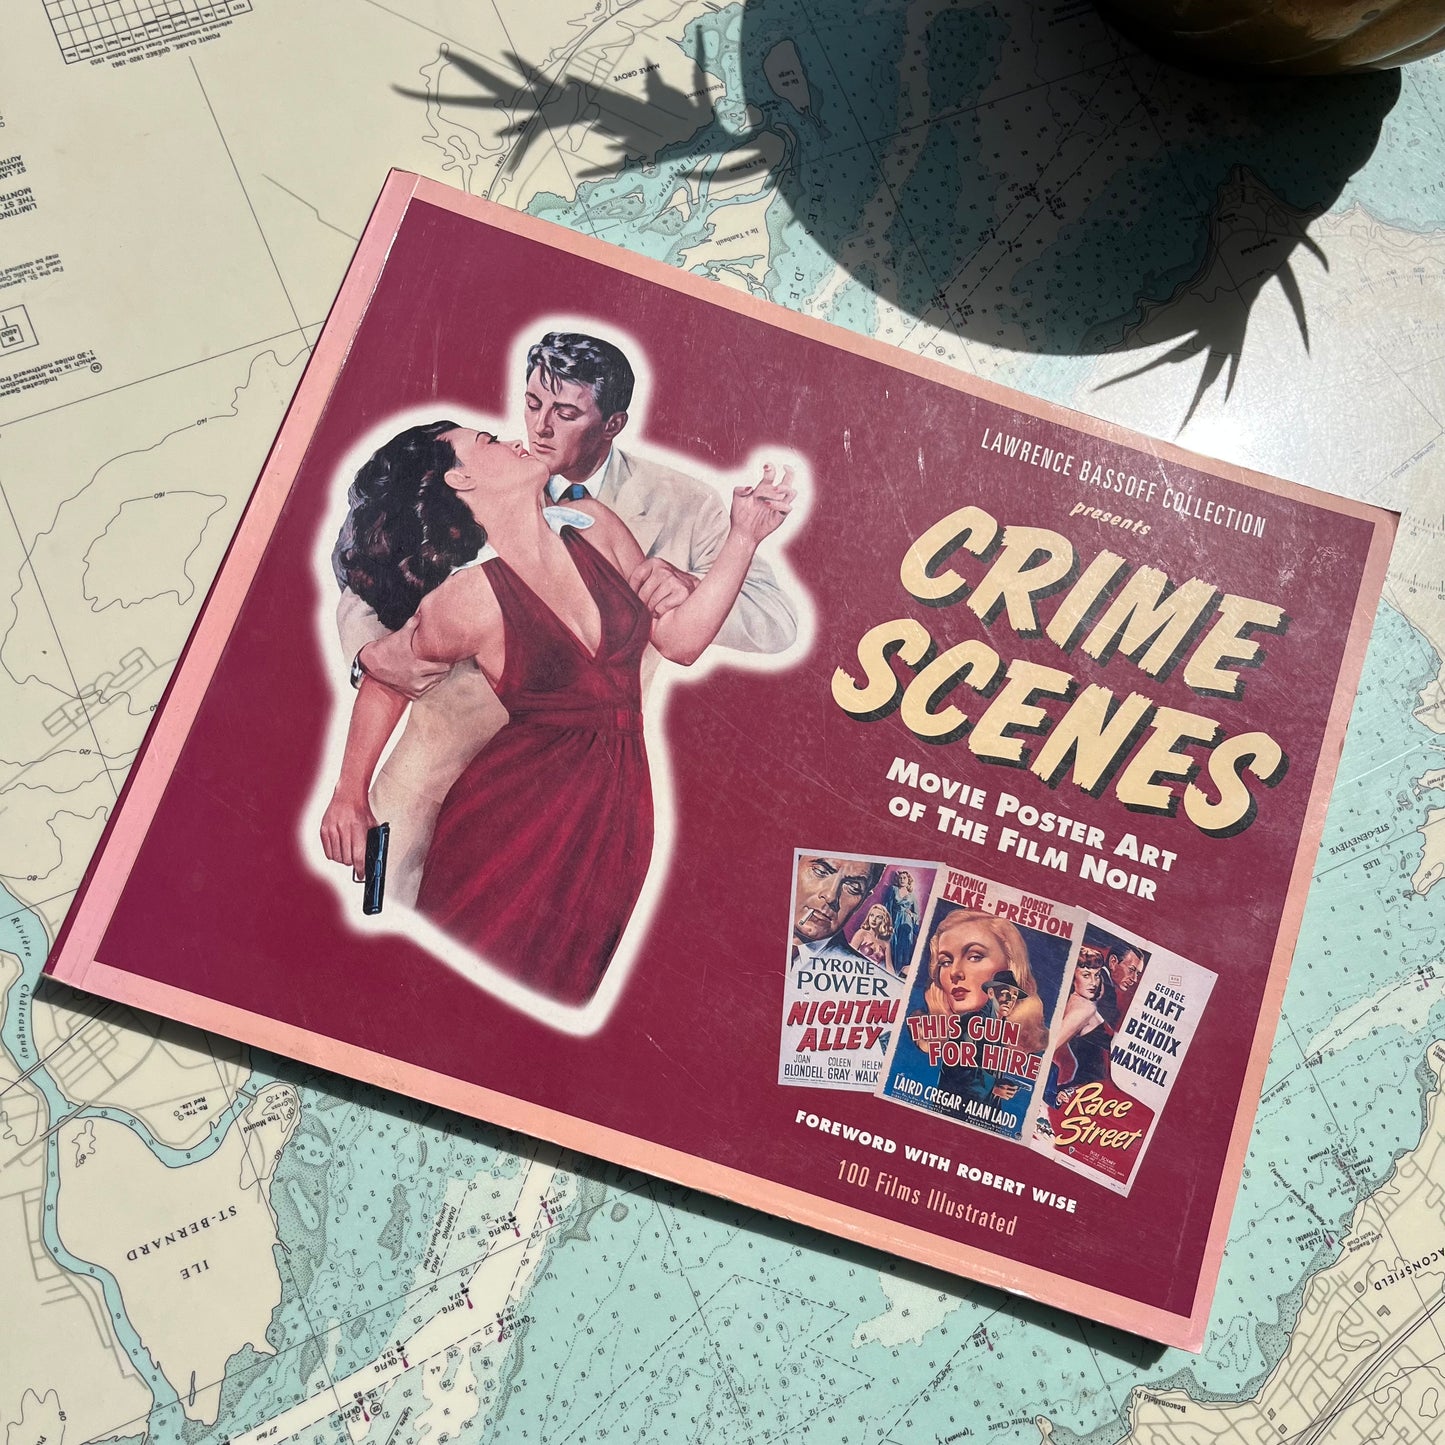 1997 Crime Scenes - Movie Poster Art of The Film Noir